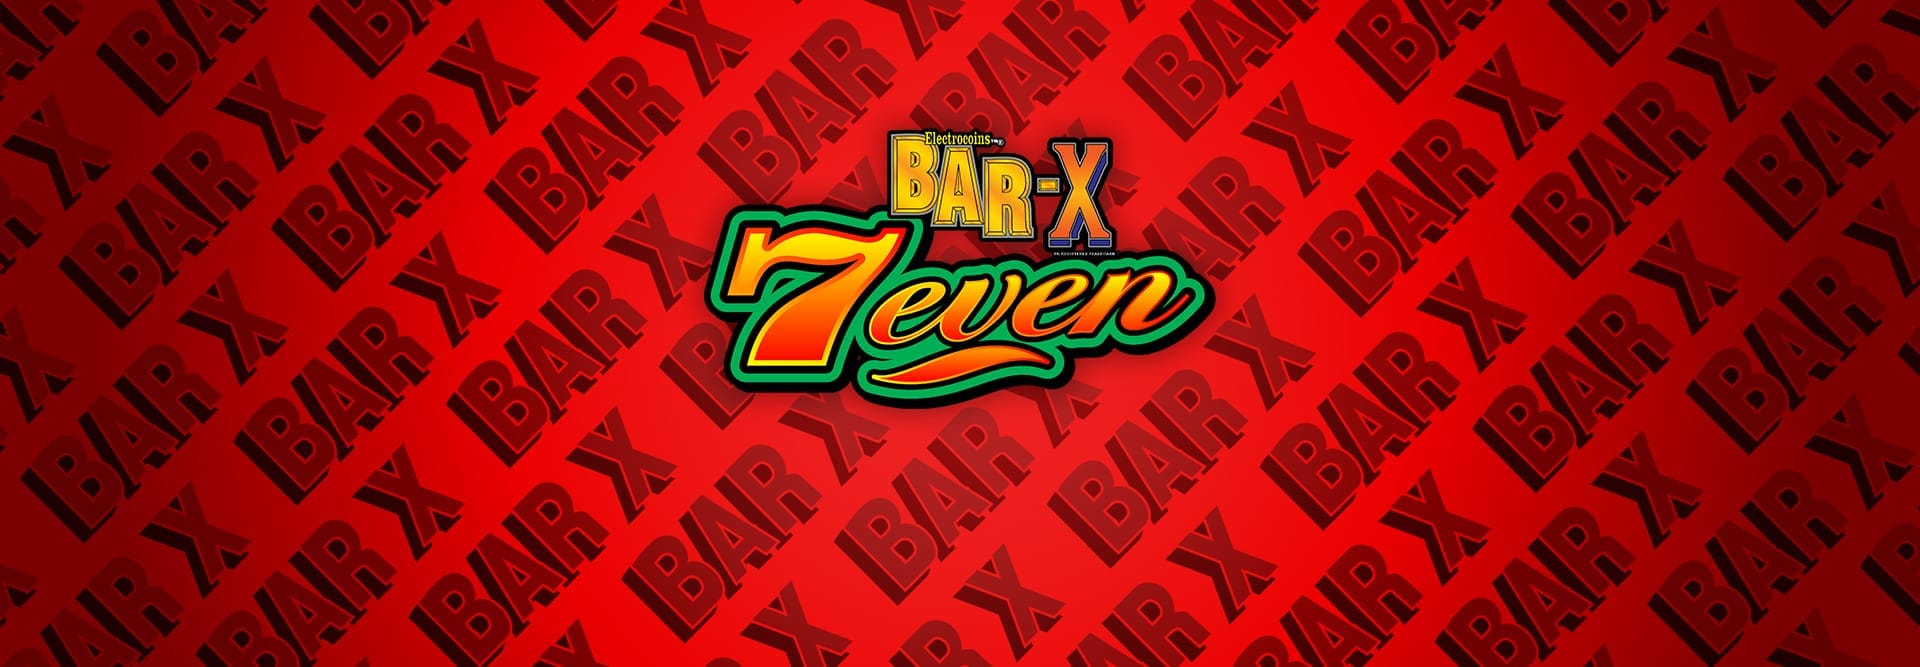 Bar-X 7even - Game Banner